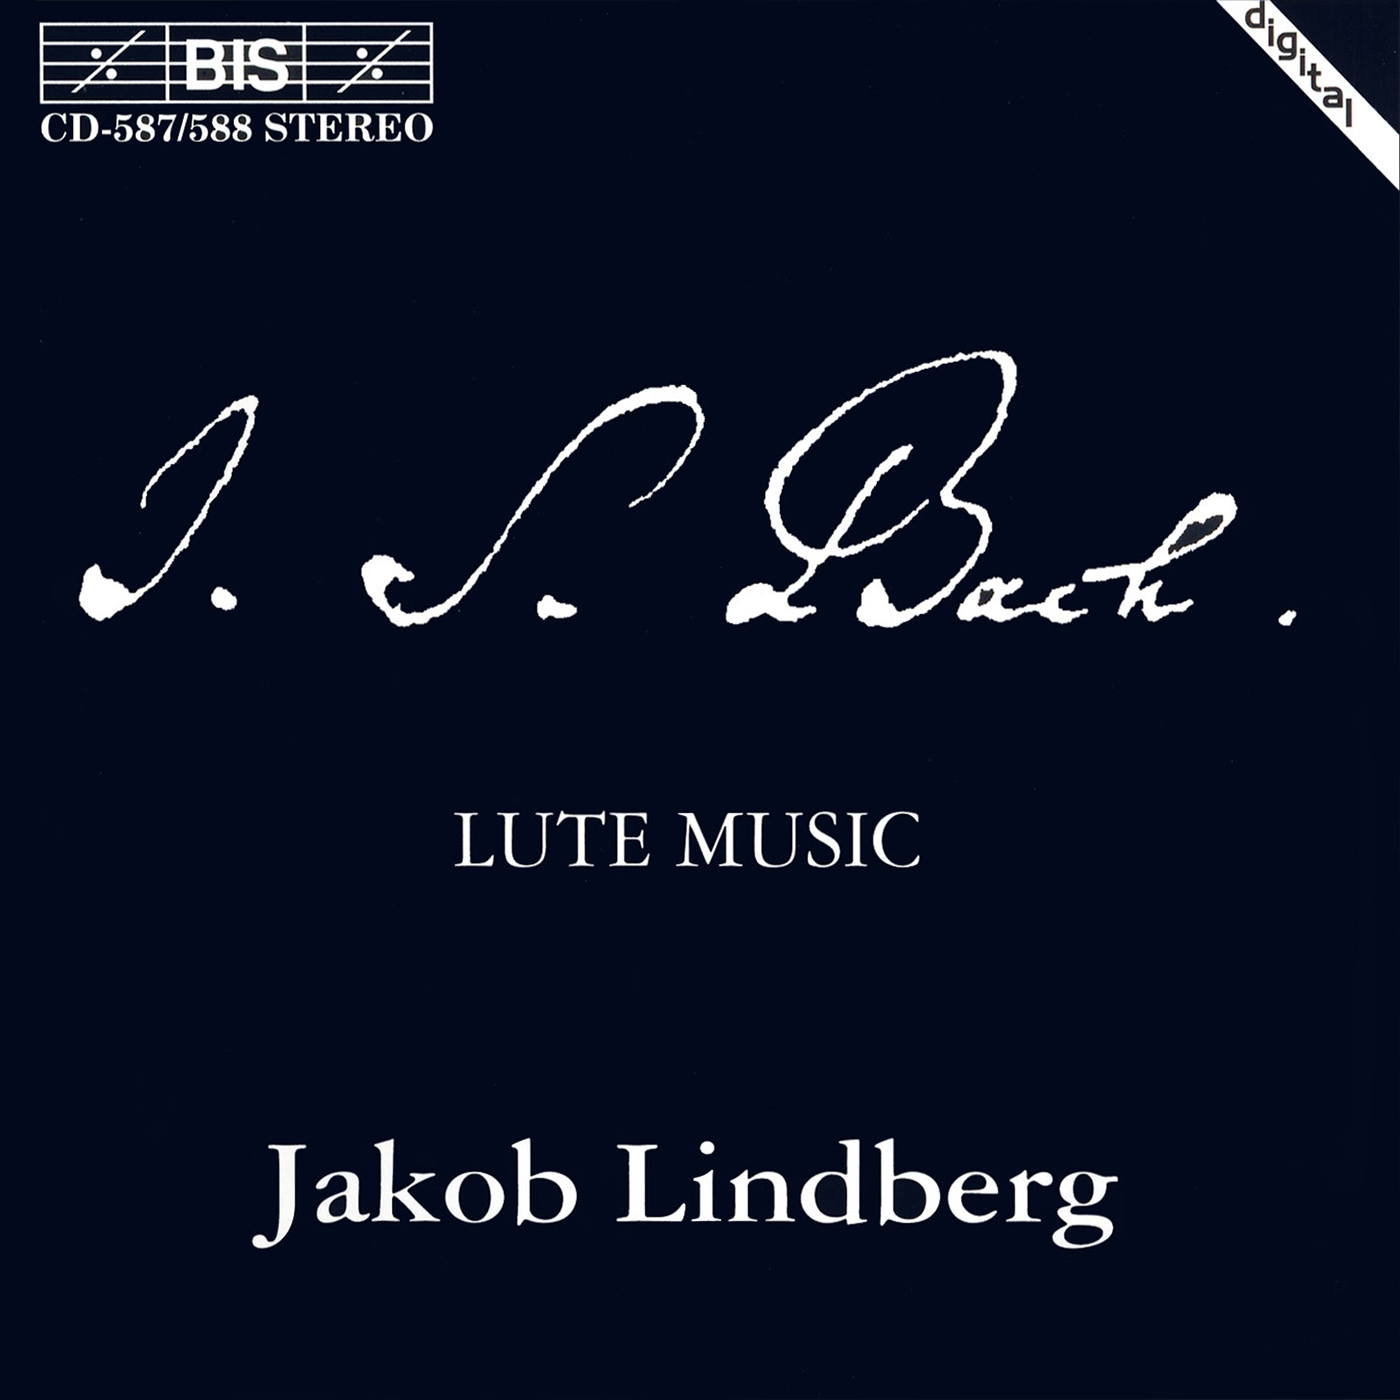 BACH, J.S.: Lute Music